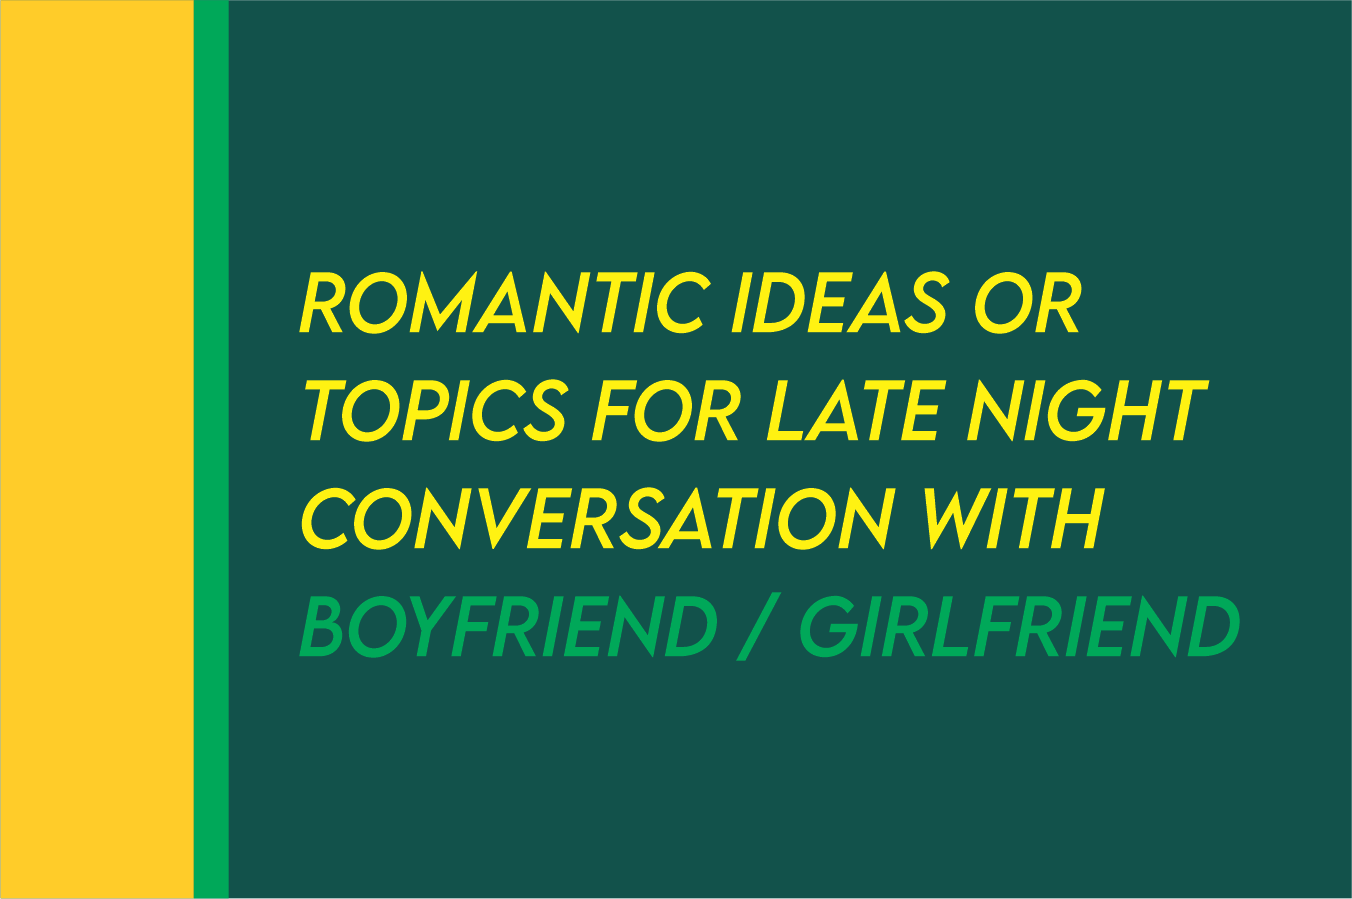 Late Night Conversation Topics With Boyfriend